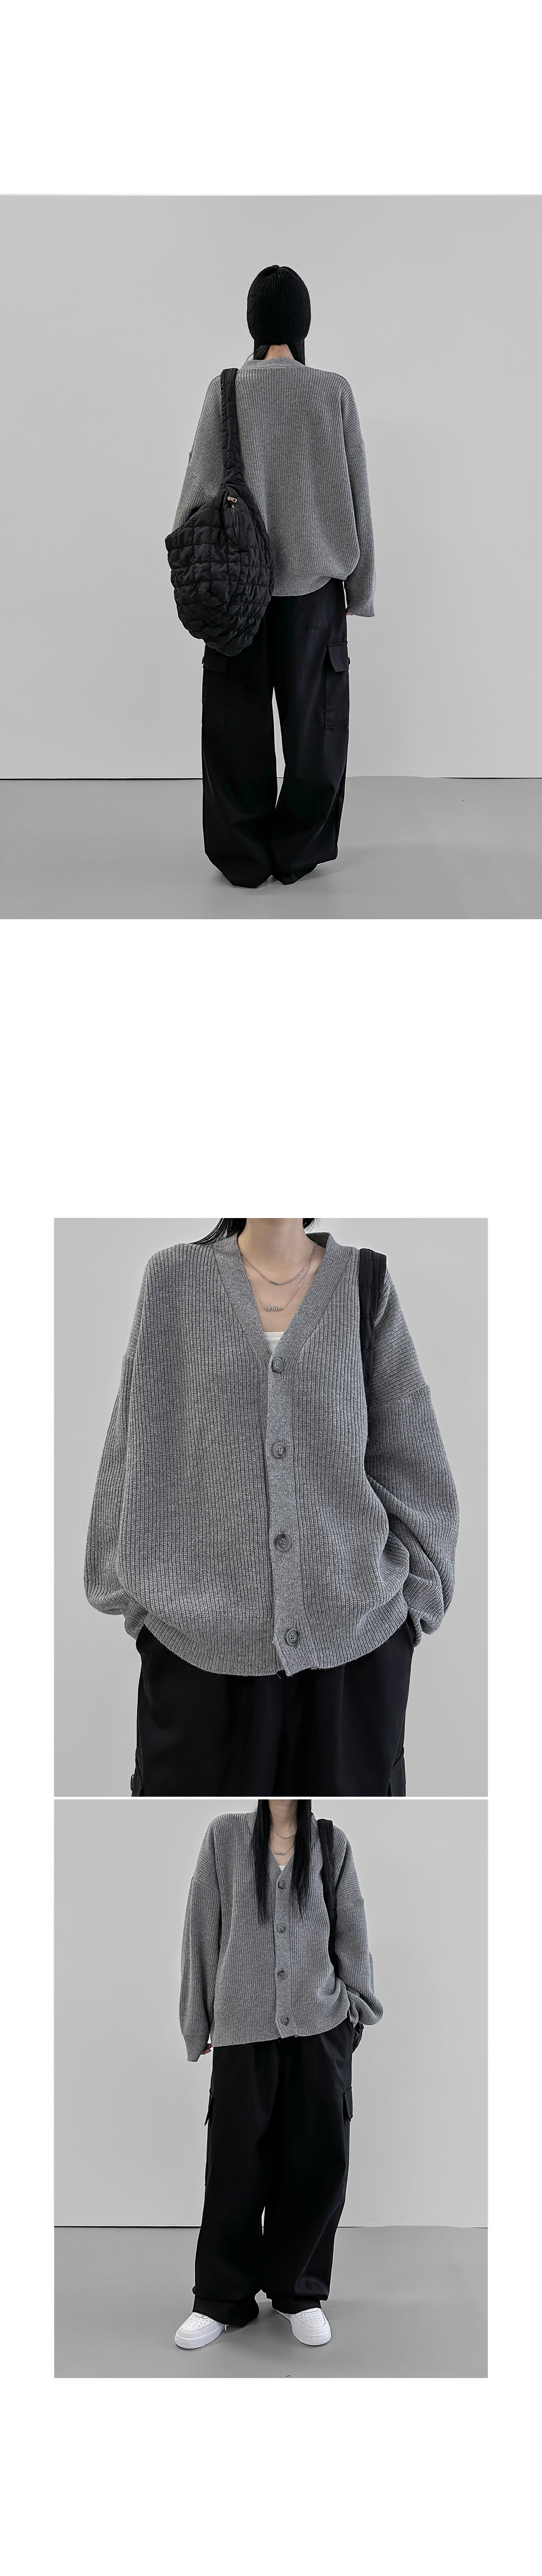 dress grey color image-S1L7